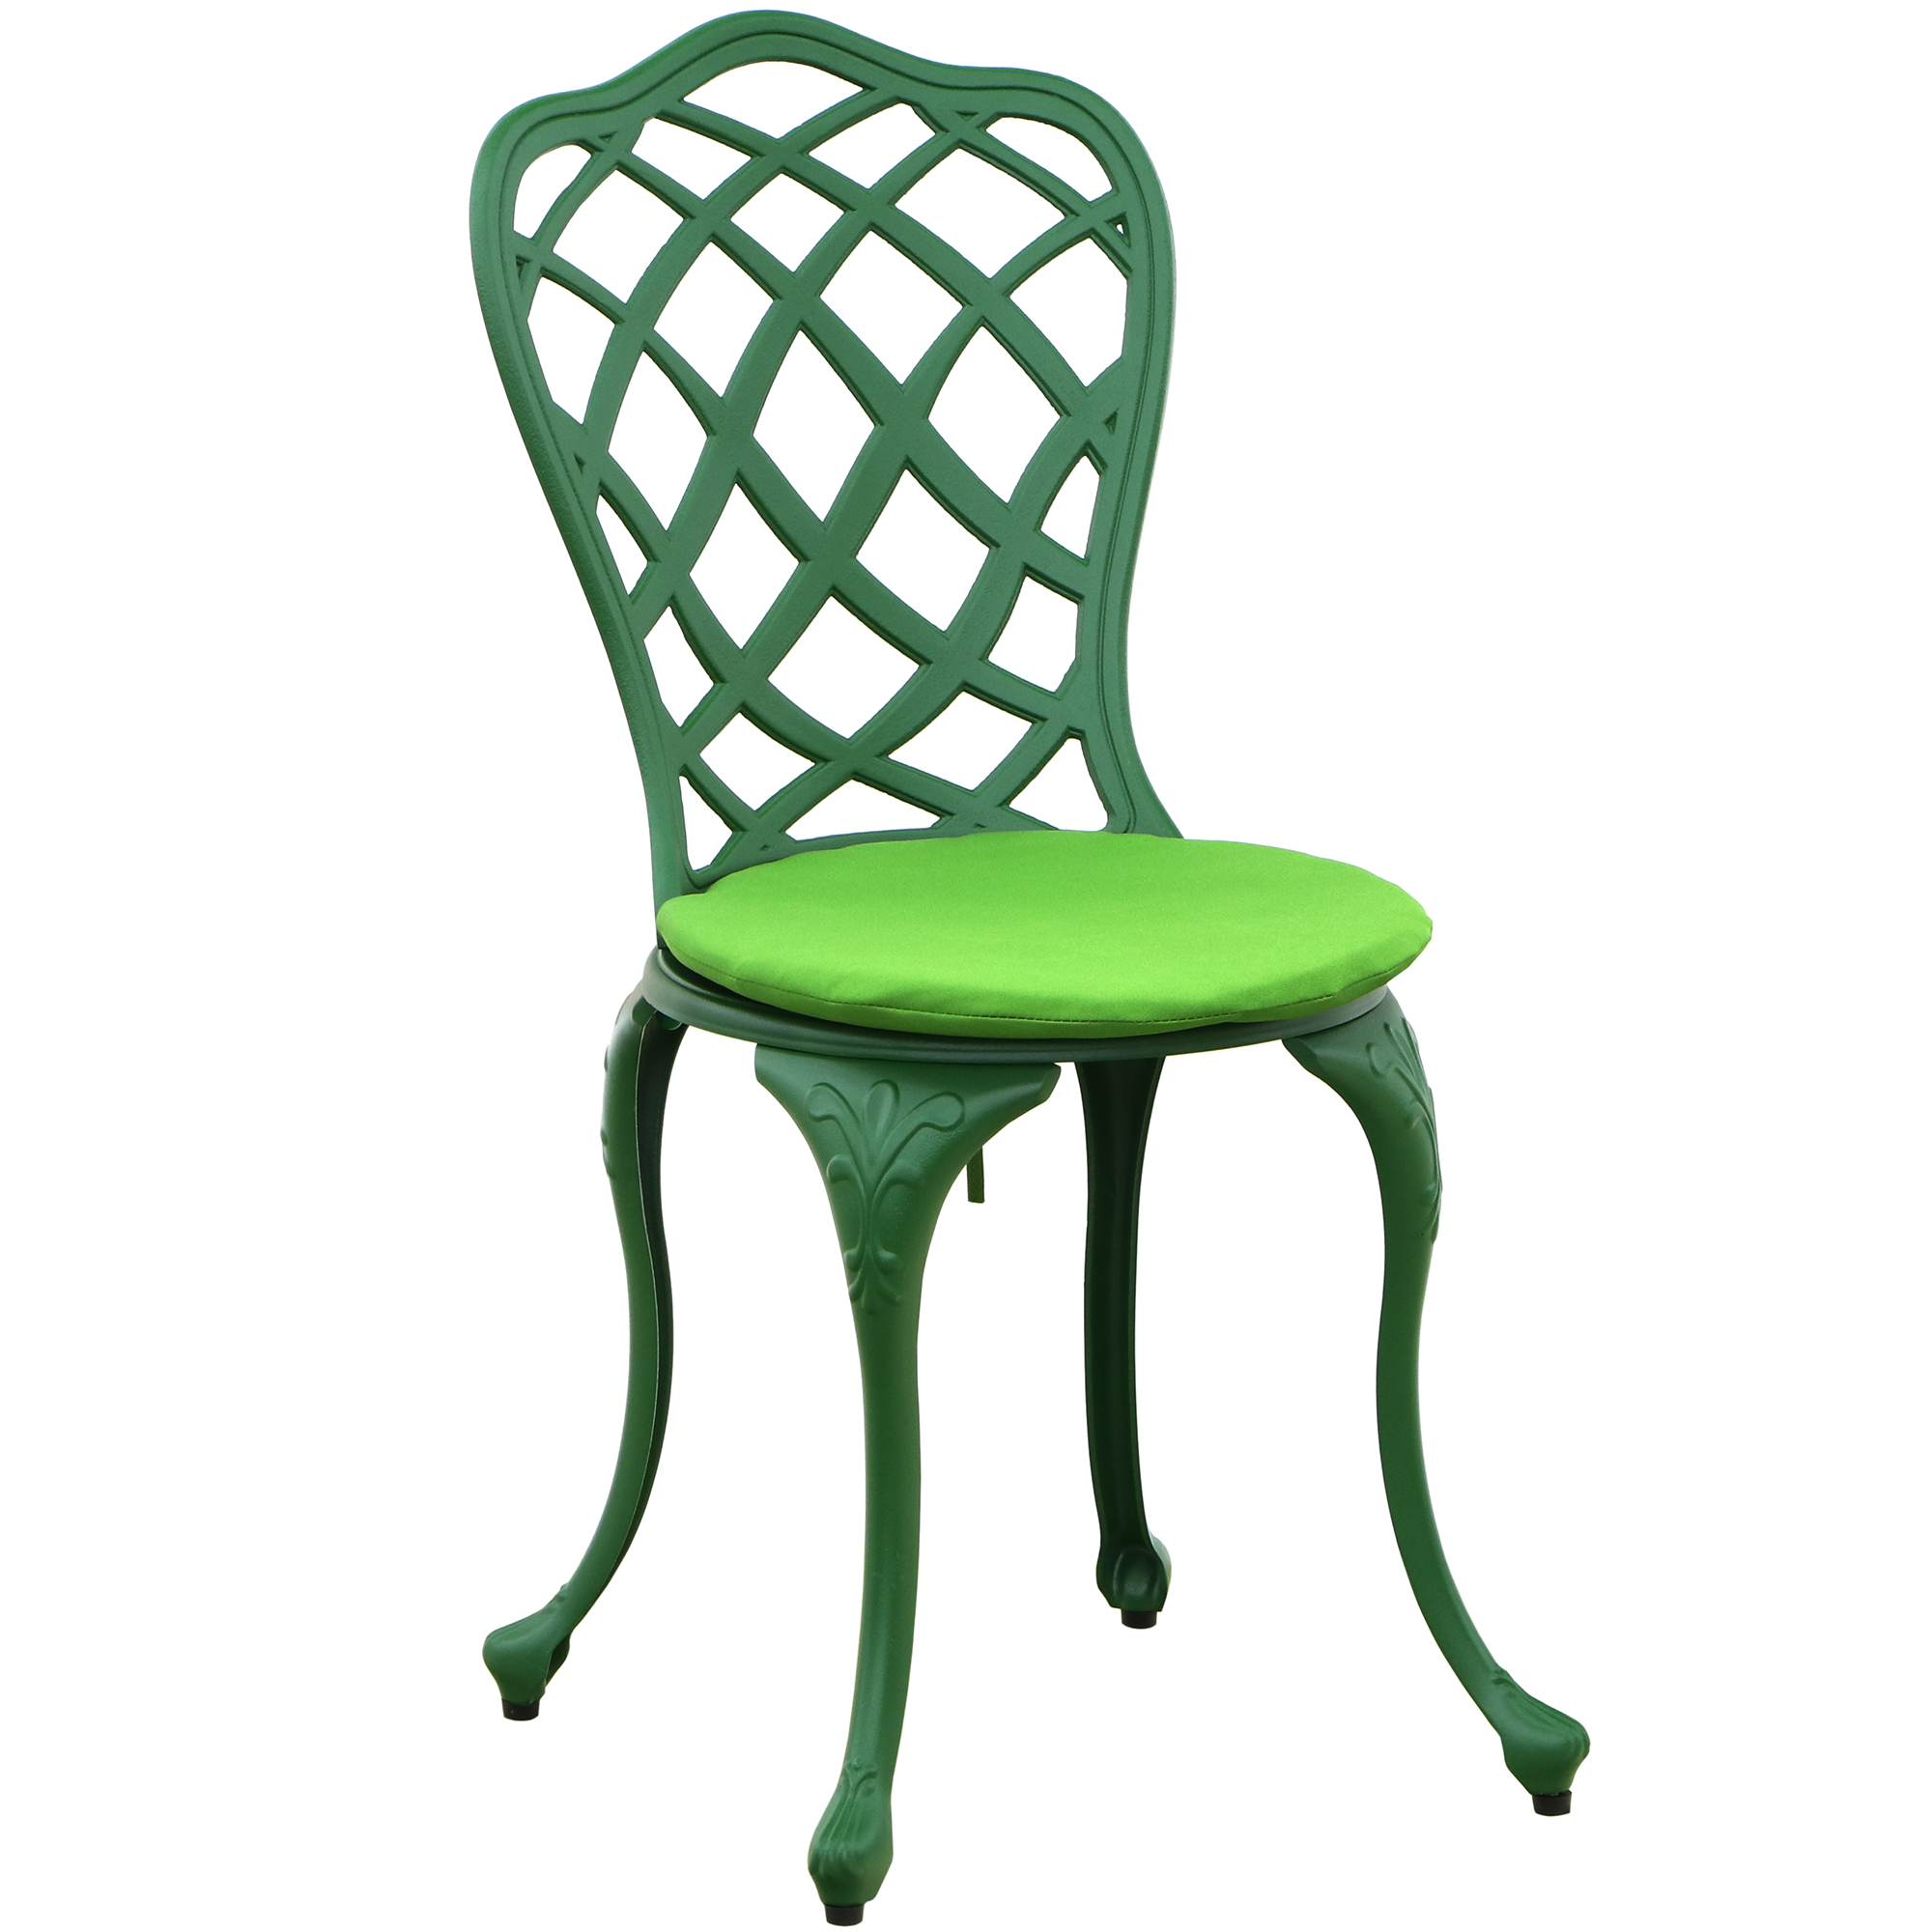 Комплект мебели Linyi 3 предмета, цвет зеленый, размер 60,5х60,5х66 см - фото 3